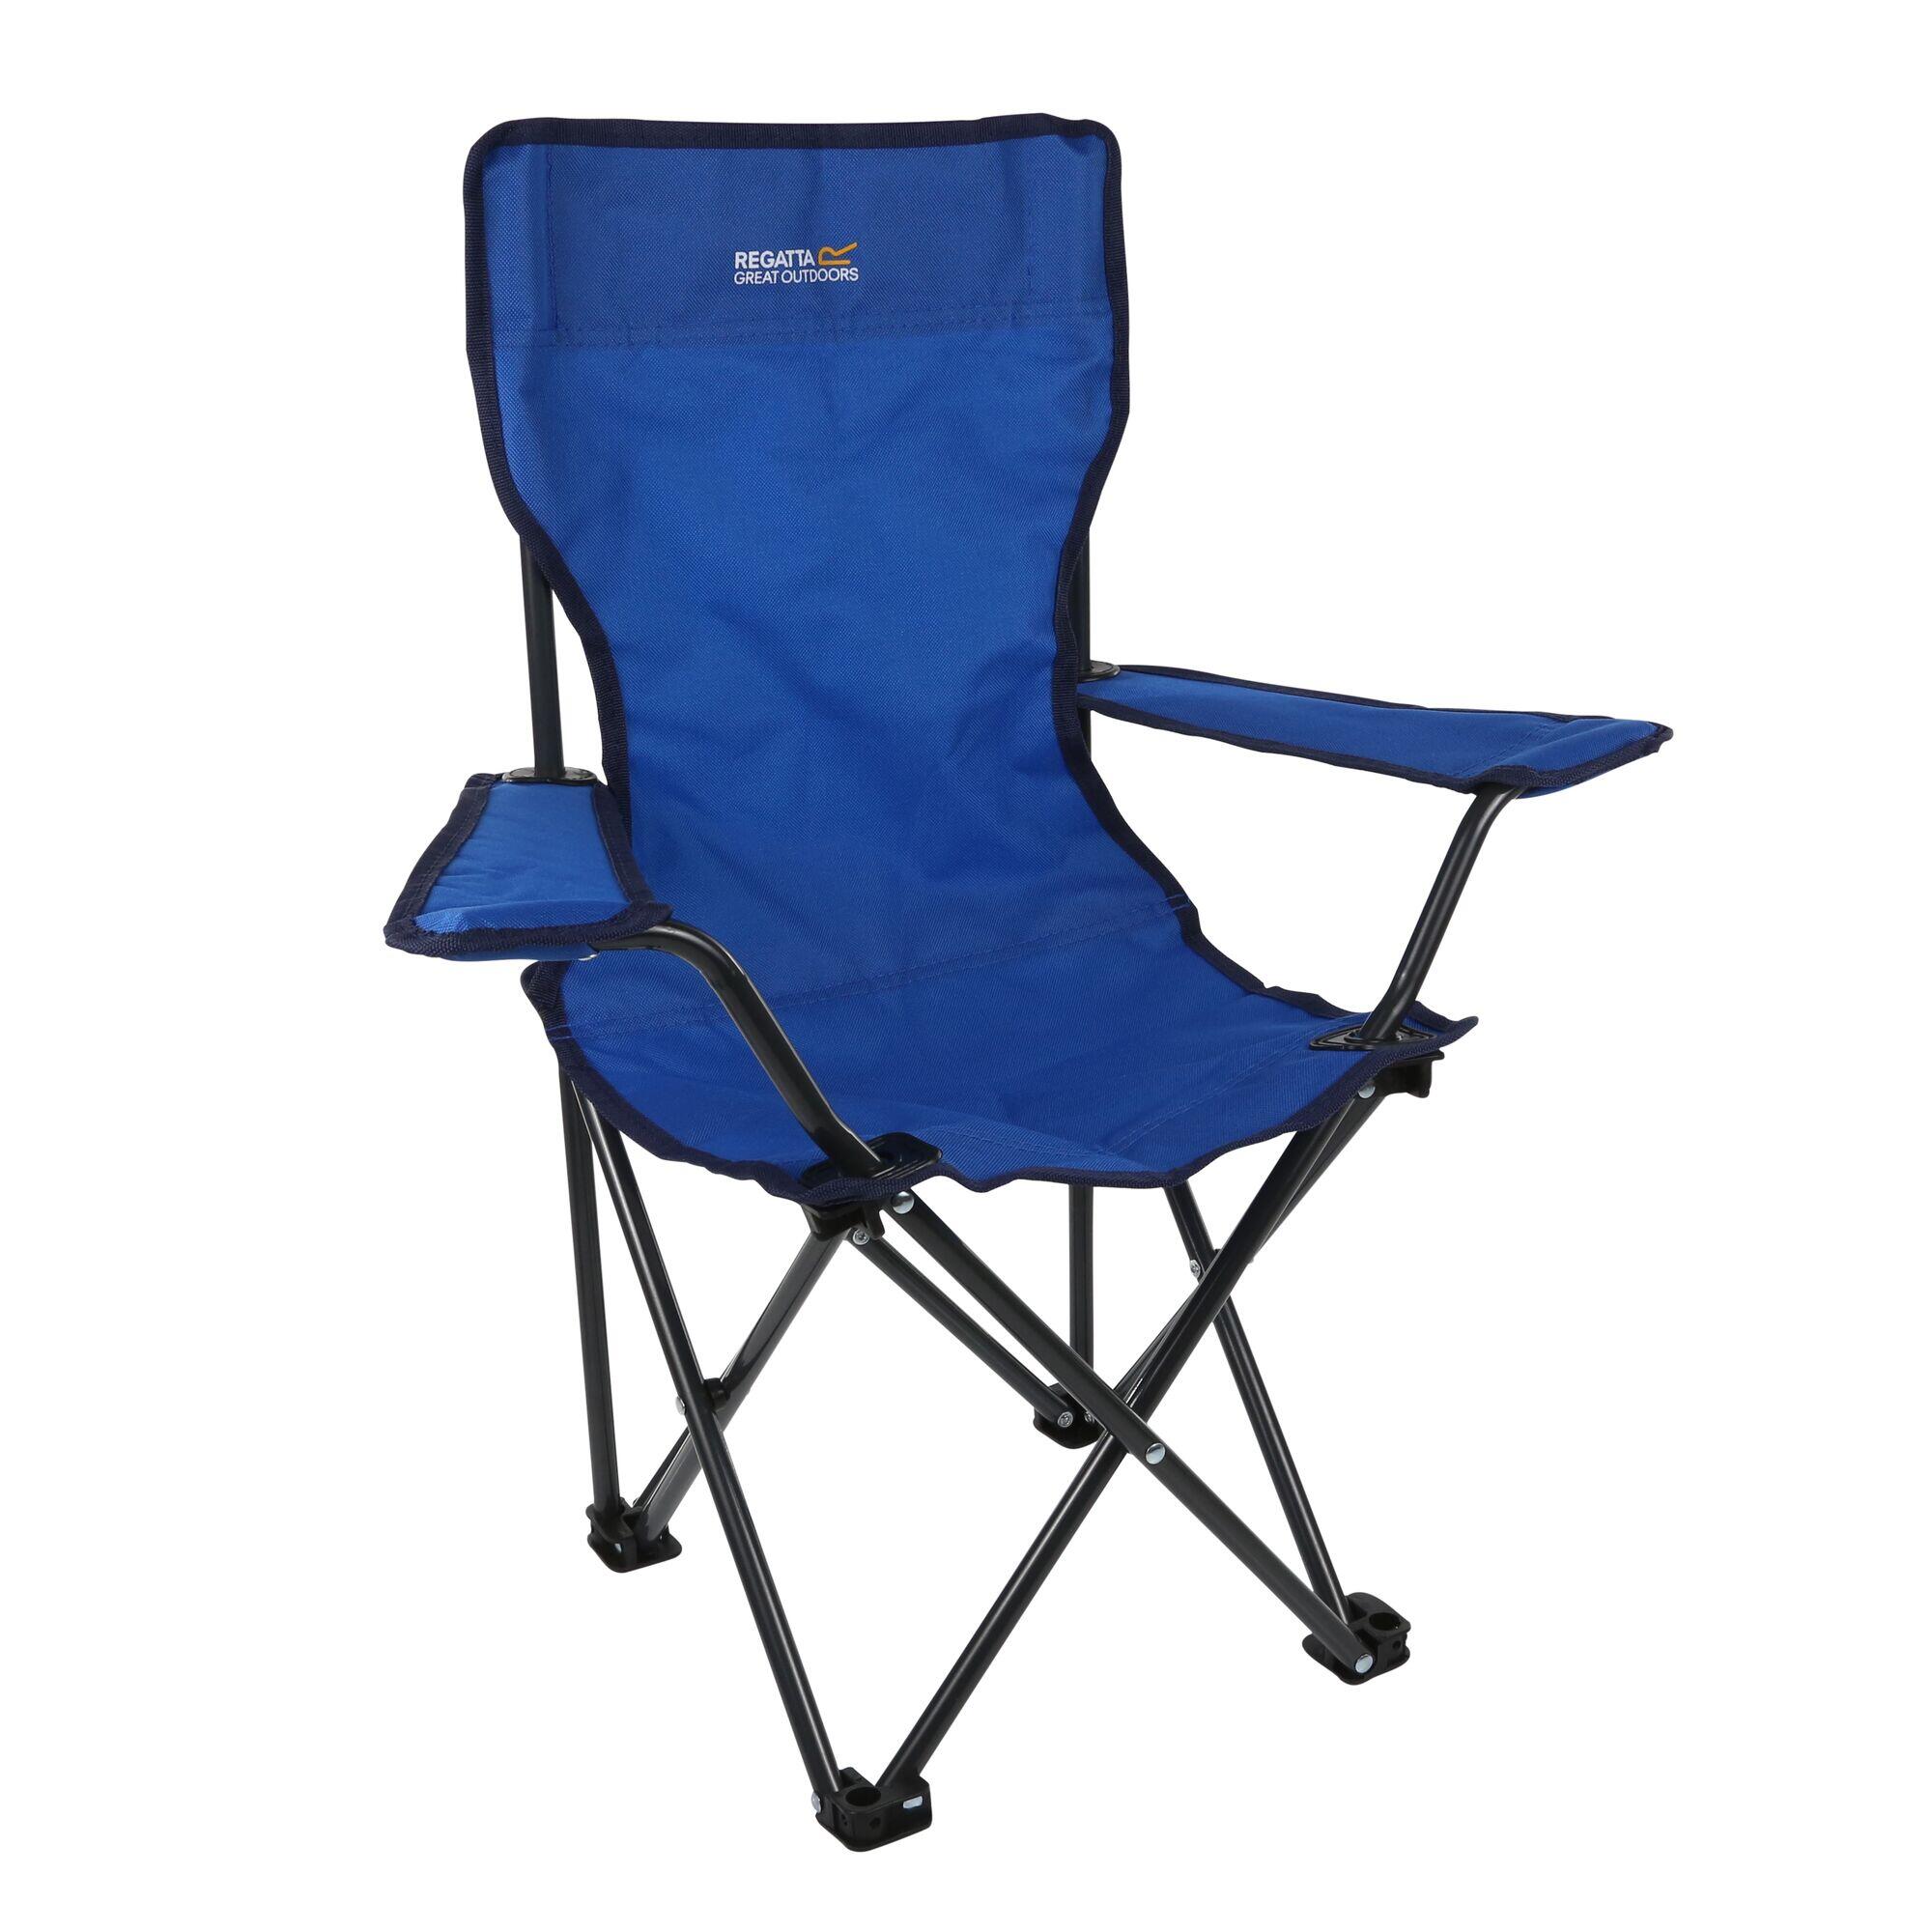 Isla Kids' Camping Chair - Oxford Blue 4/5